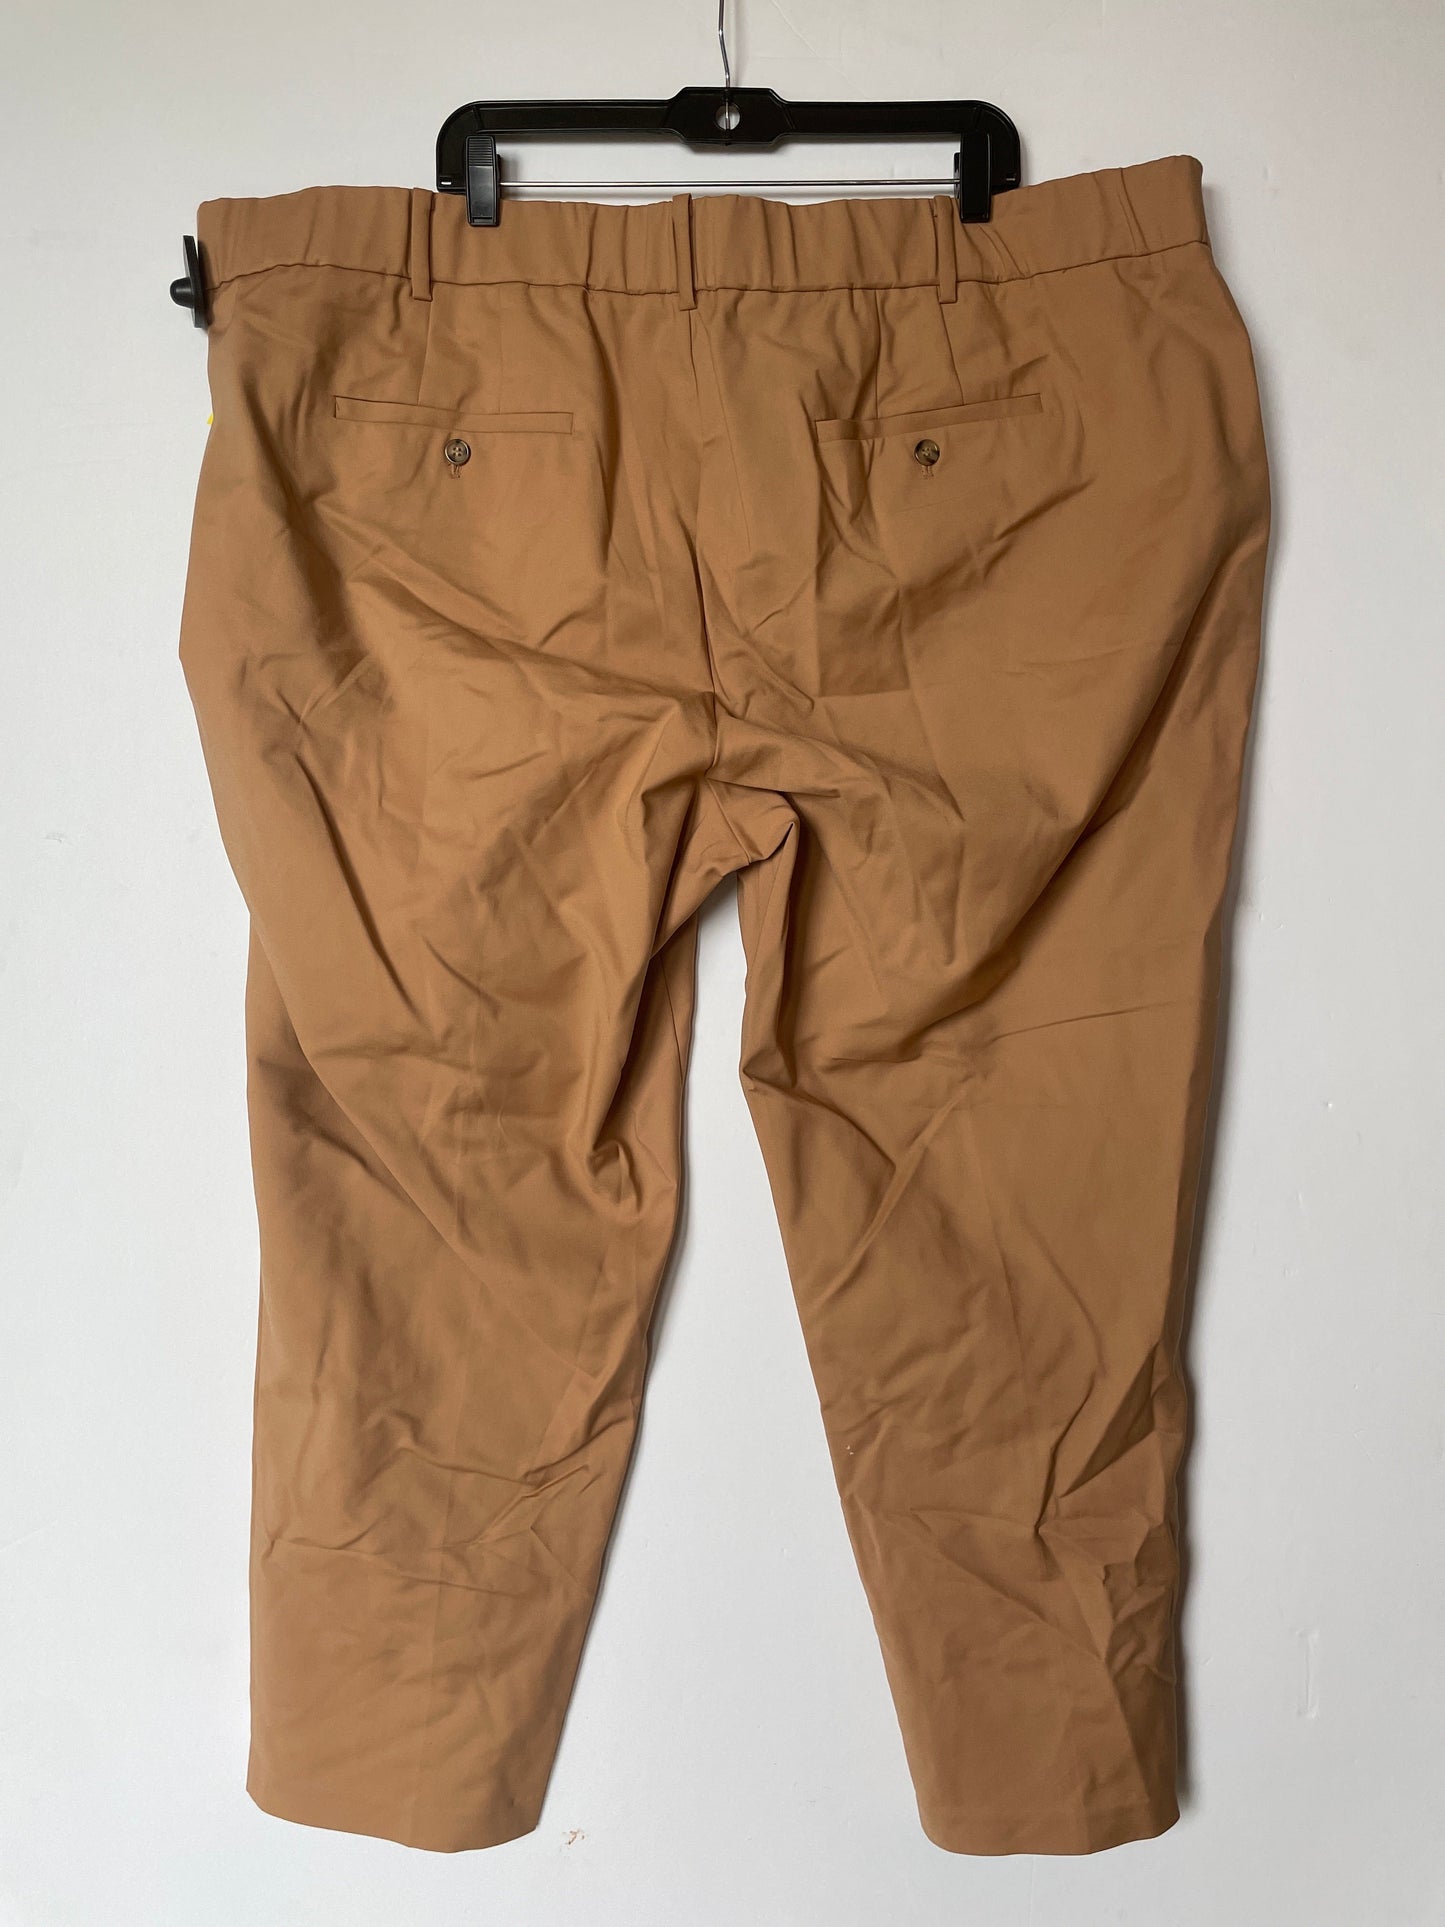 Tan Pants Cropped Eloquii, Size 26